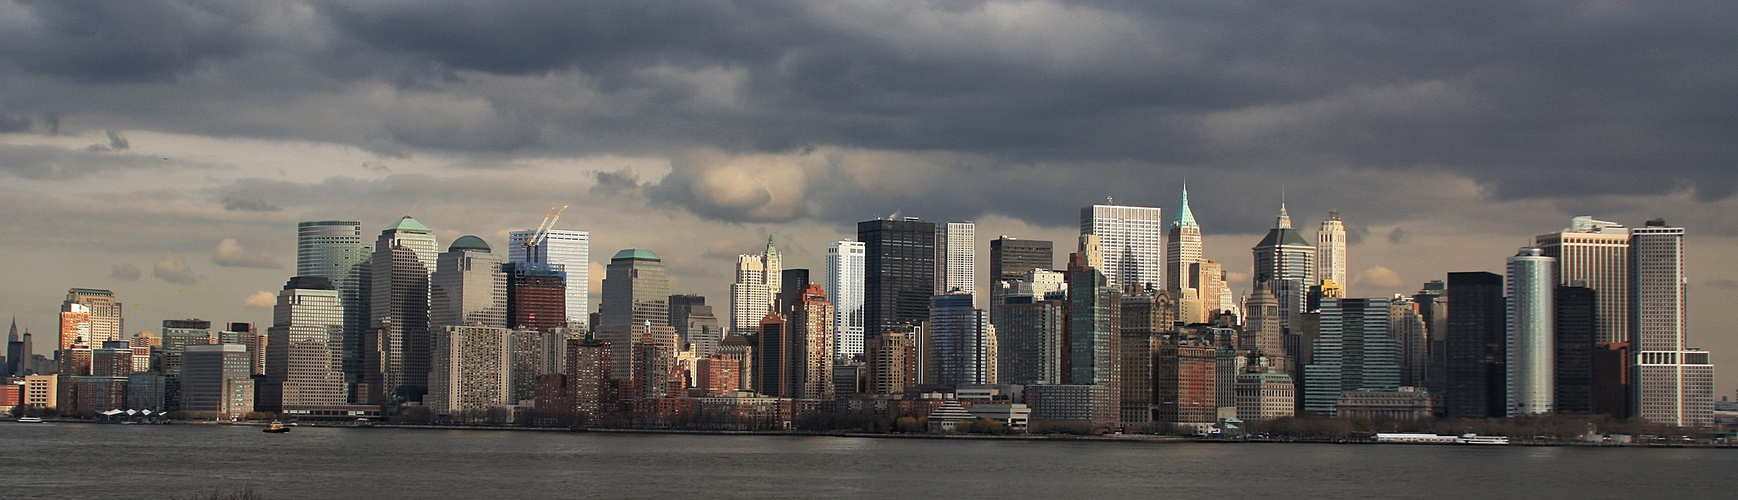 Manhattan Skyline / Liberty Island View / 2010 / 1